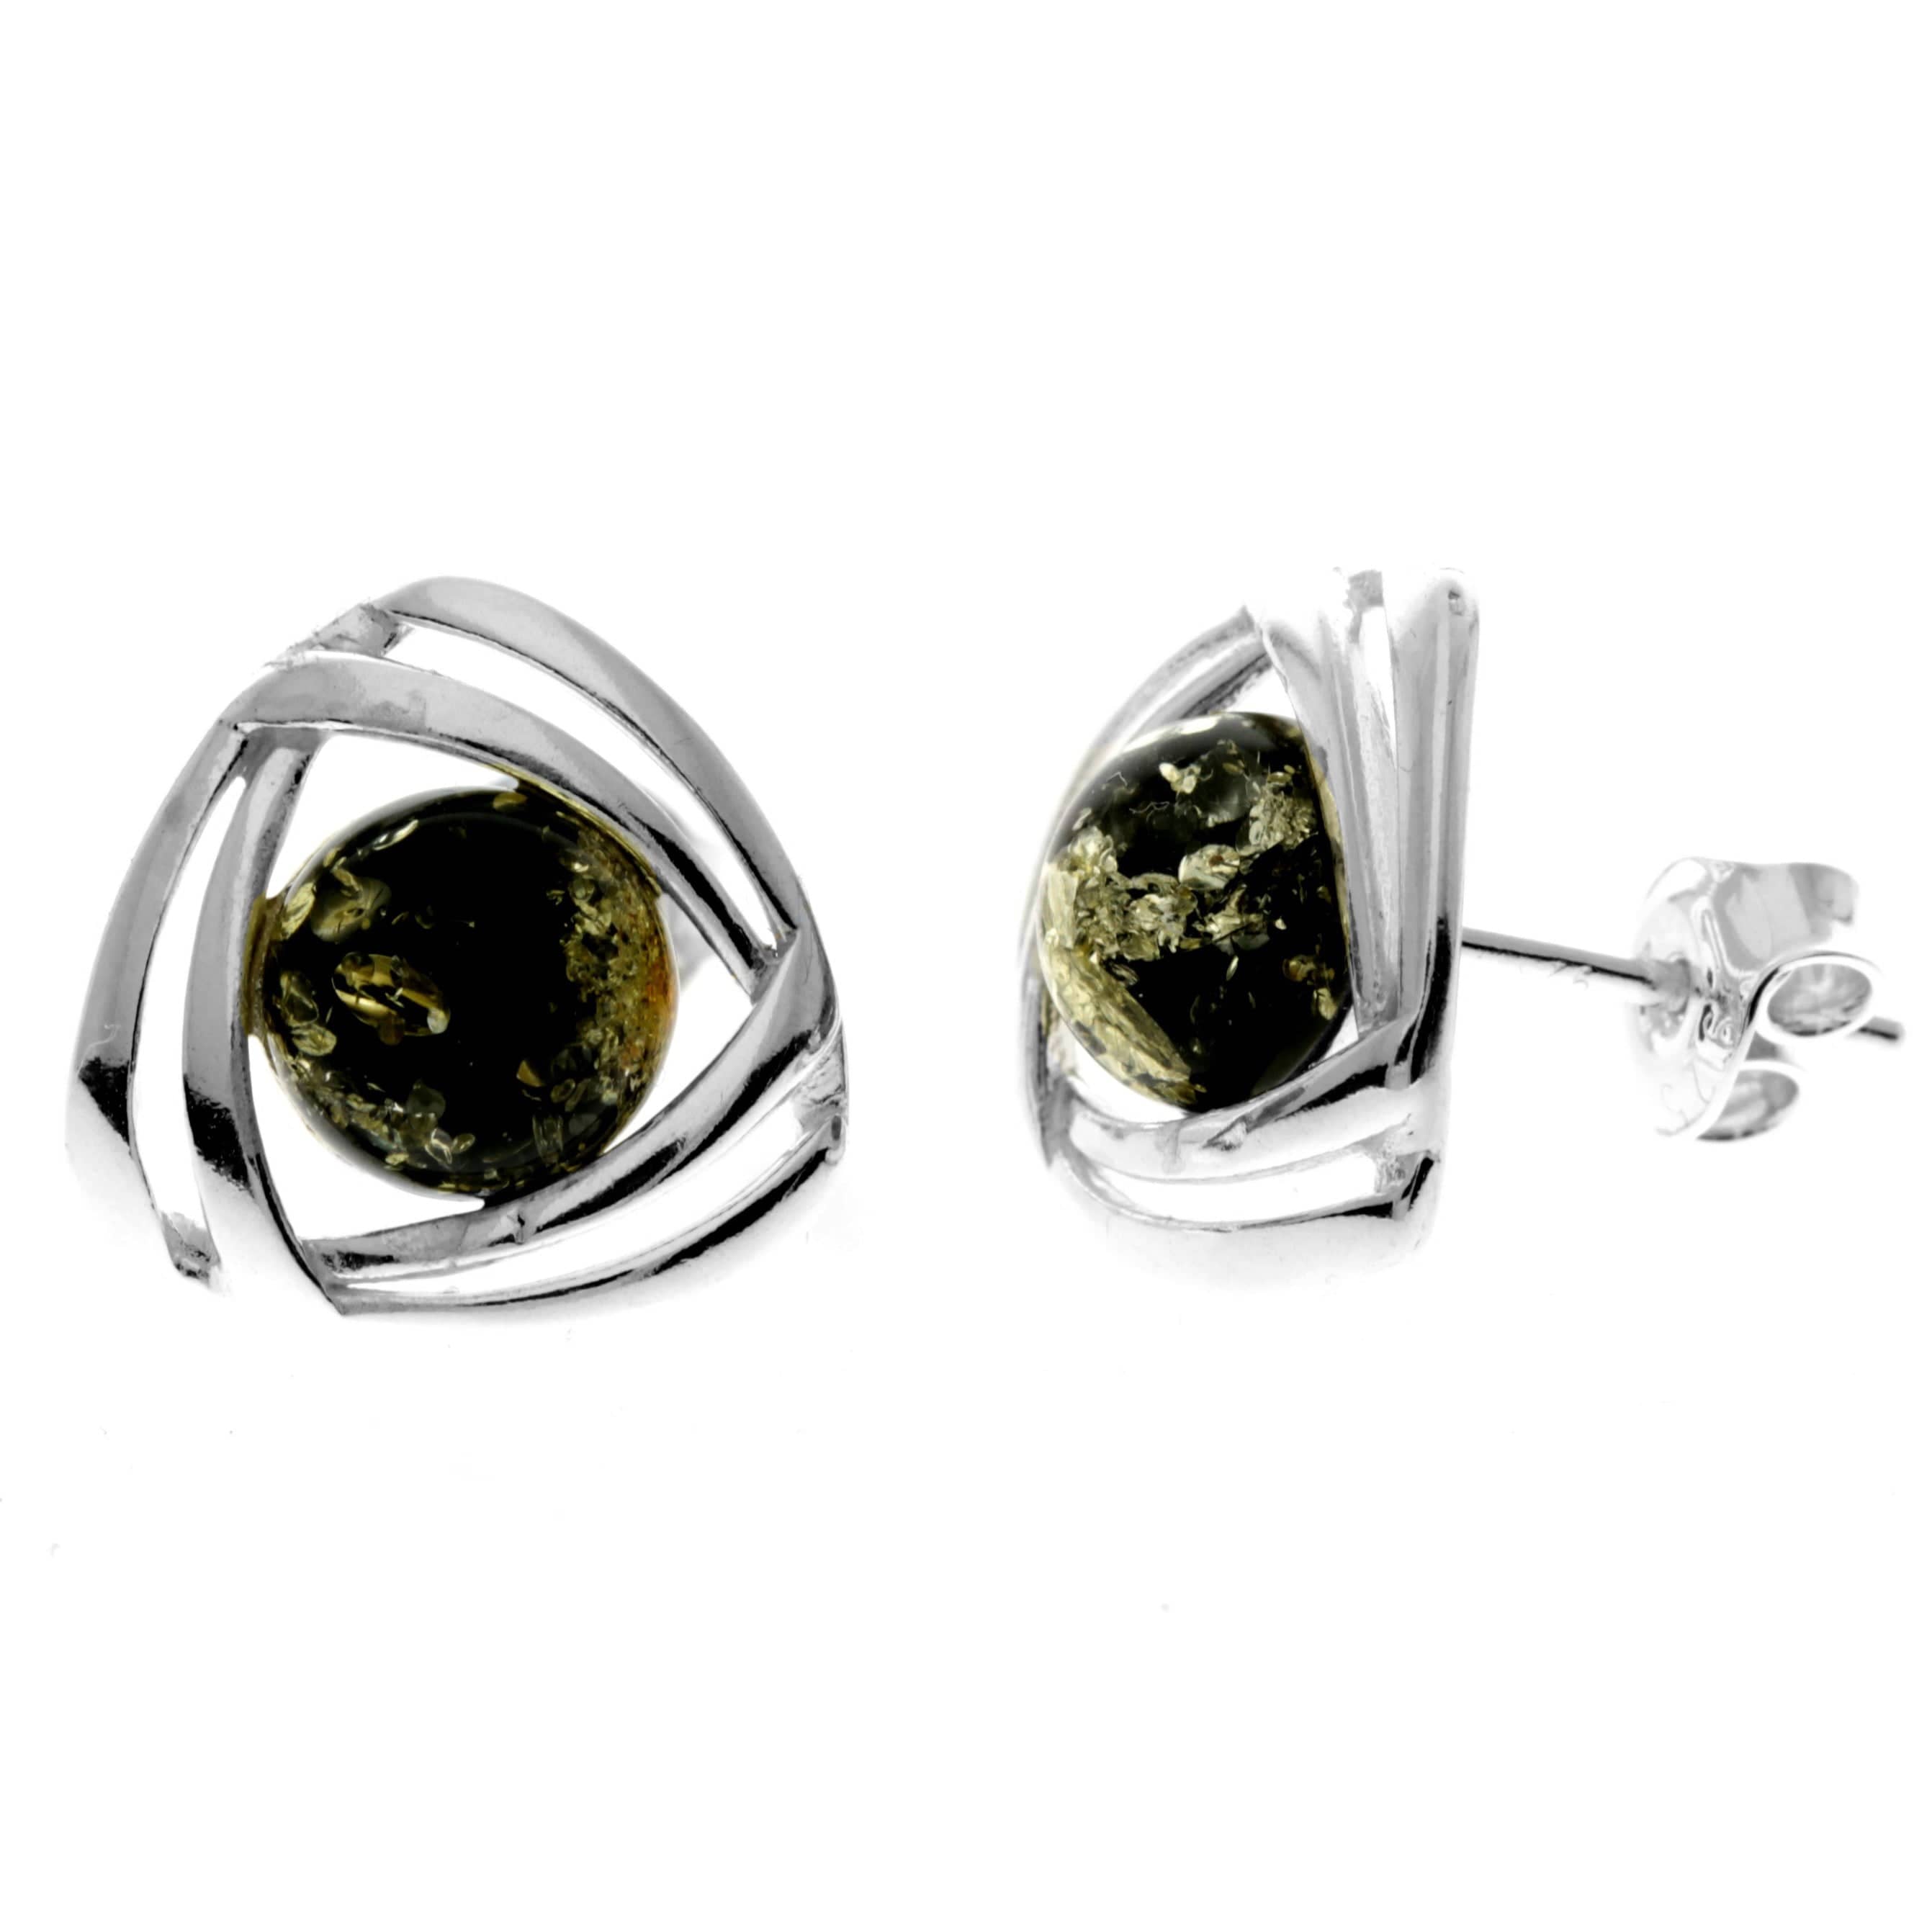 925 Sterling Silver & Baltic Amber Modern Celtic Studs Earrings - GL1032